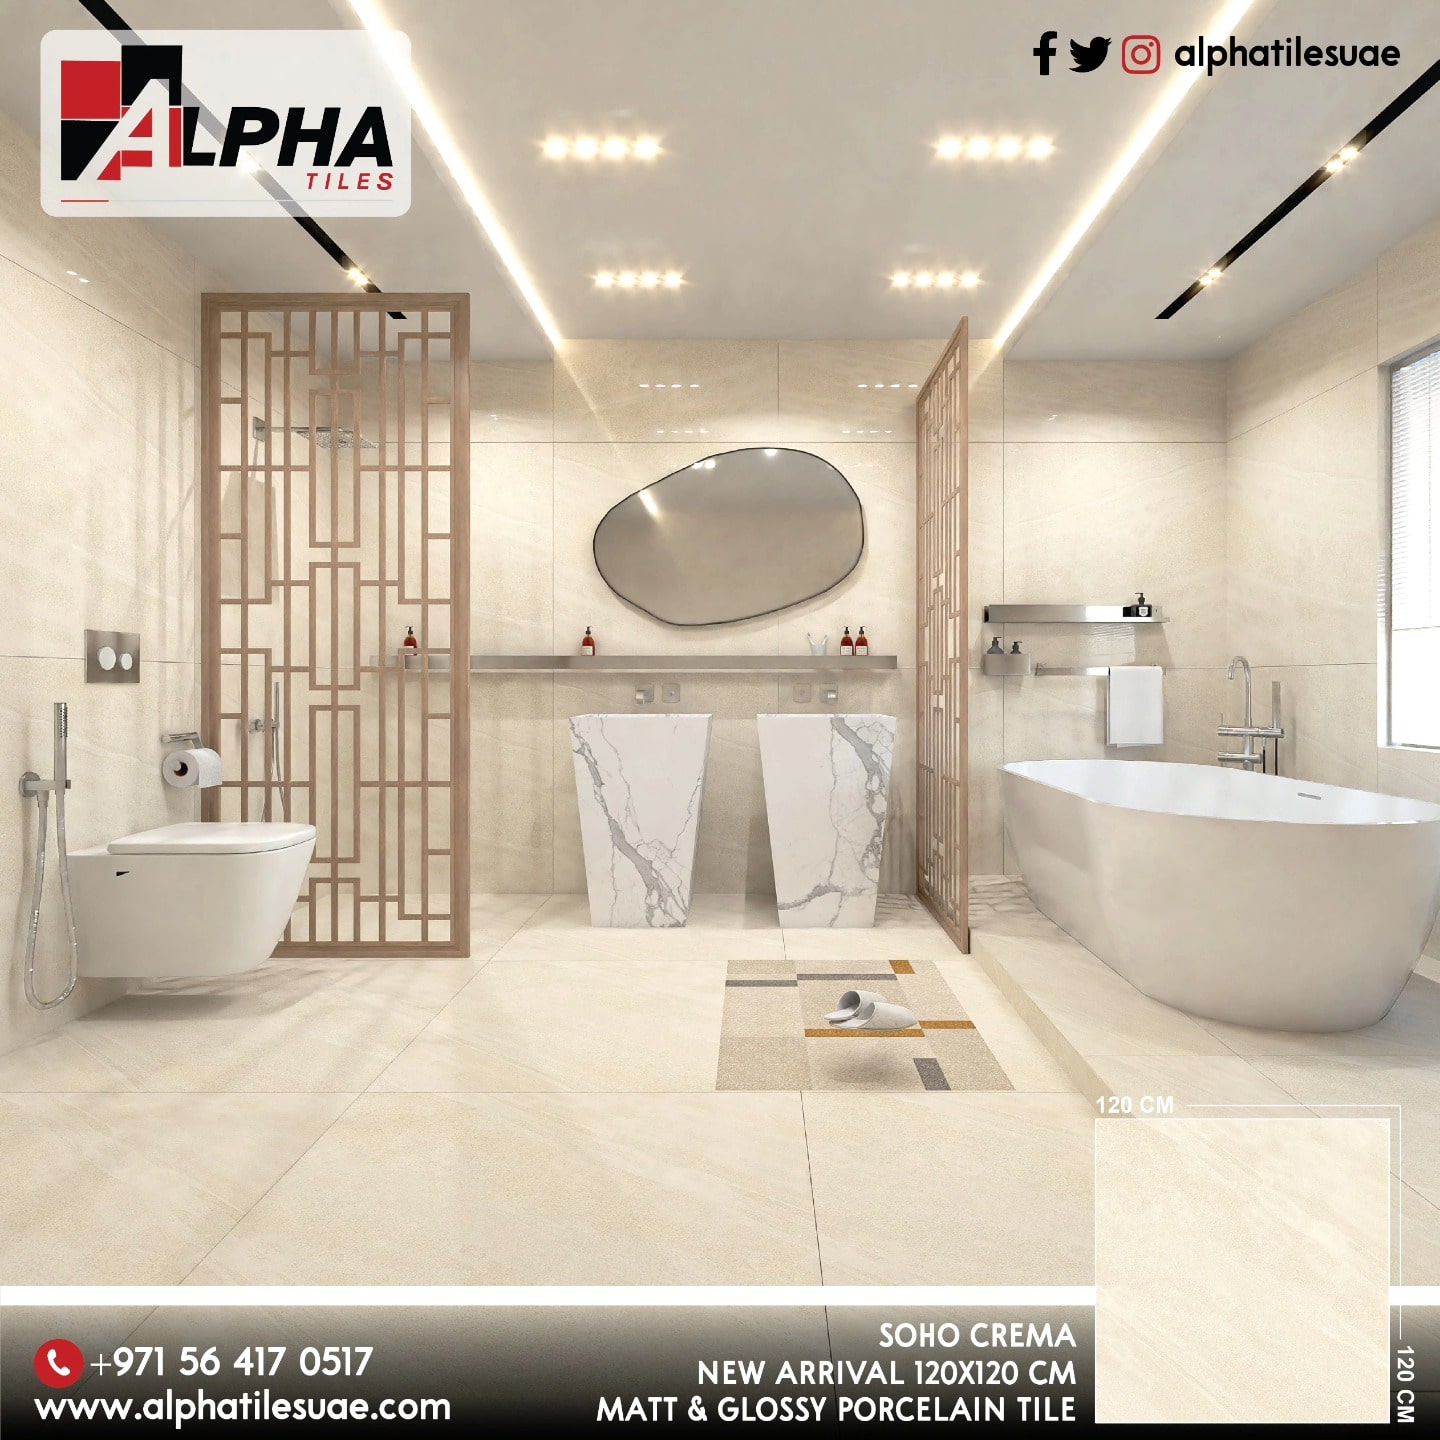 Durable Bathroom Floor Tiles in Dubai - Sharjah Construction, labour